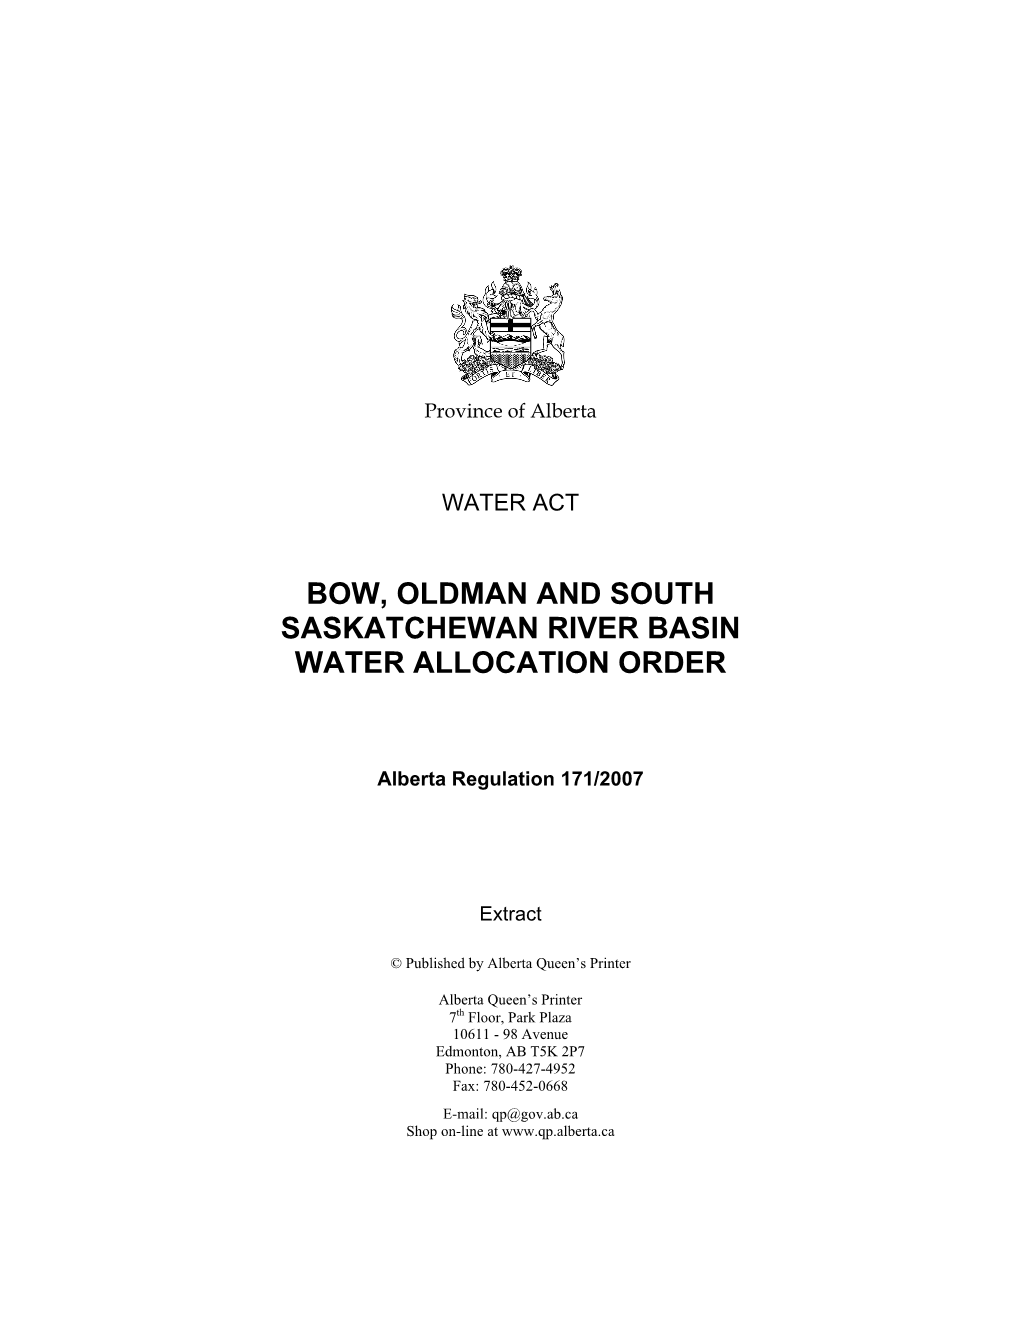 Bow, Oldman and South Saskatchewan River Basin Water Allocation Order